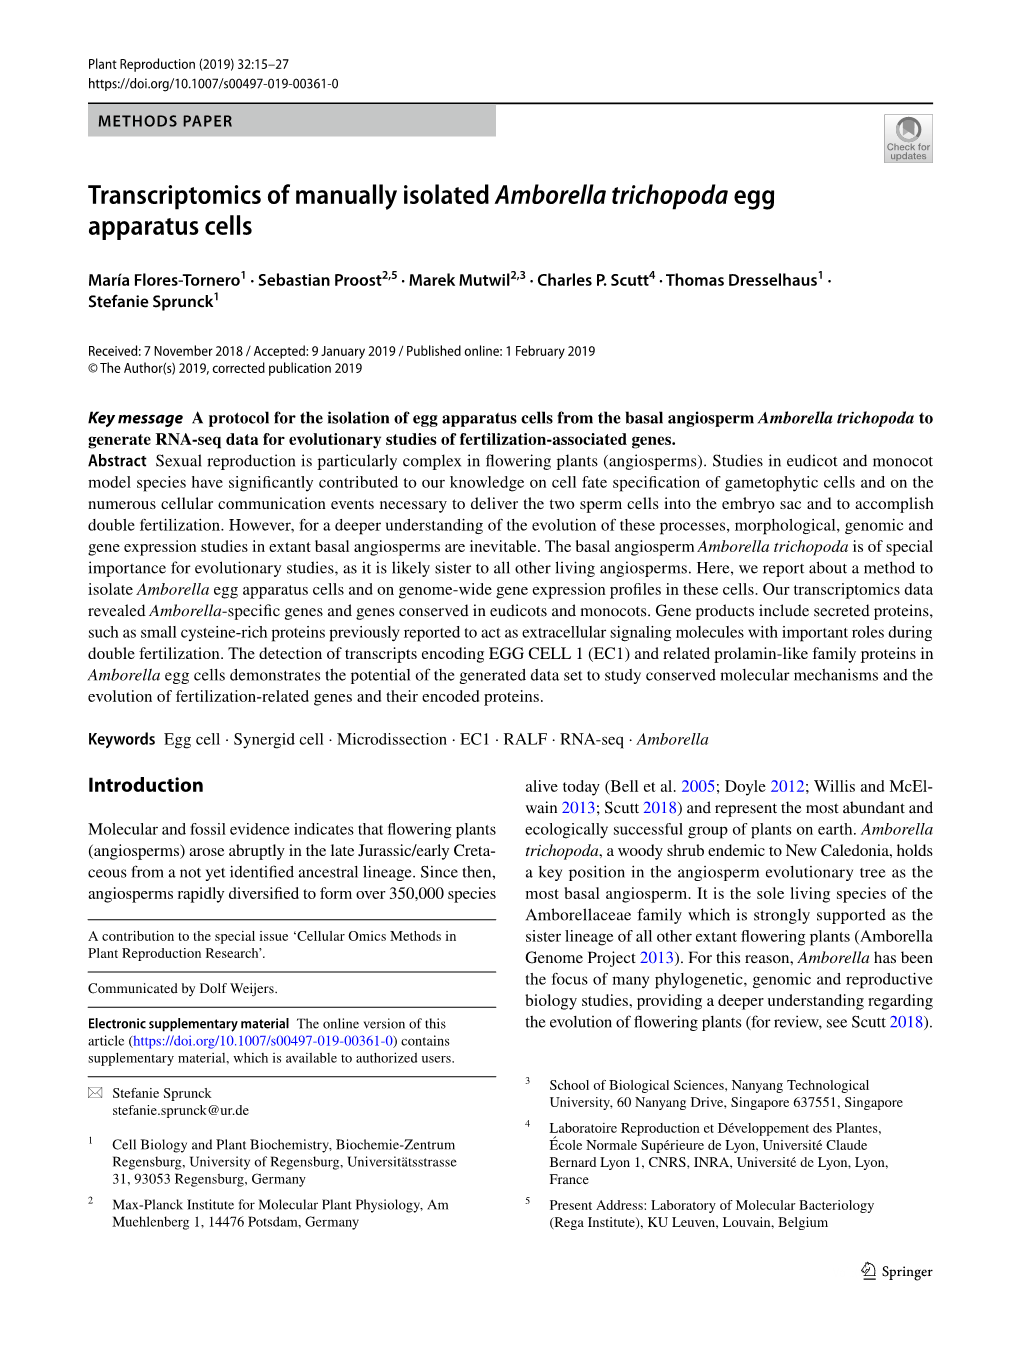 Transcriptomics of Manually Isolated Amborella Trichopoda Egg Apparatus Cells